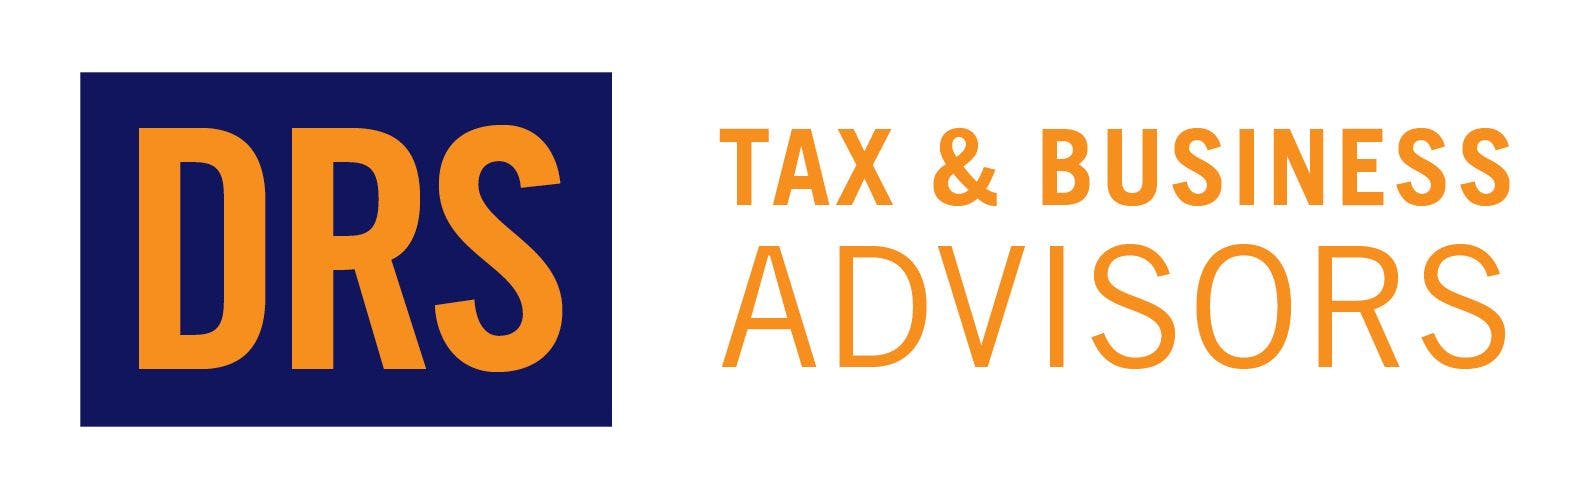 DRS Tax & Business Advisors logo